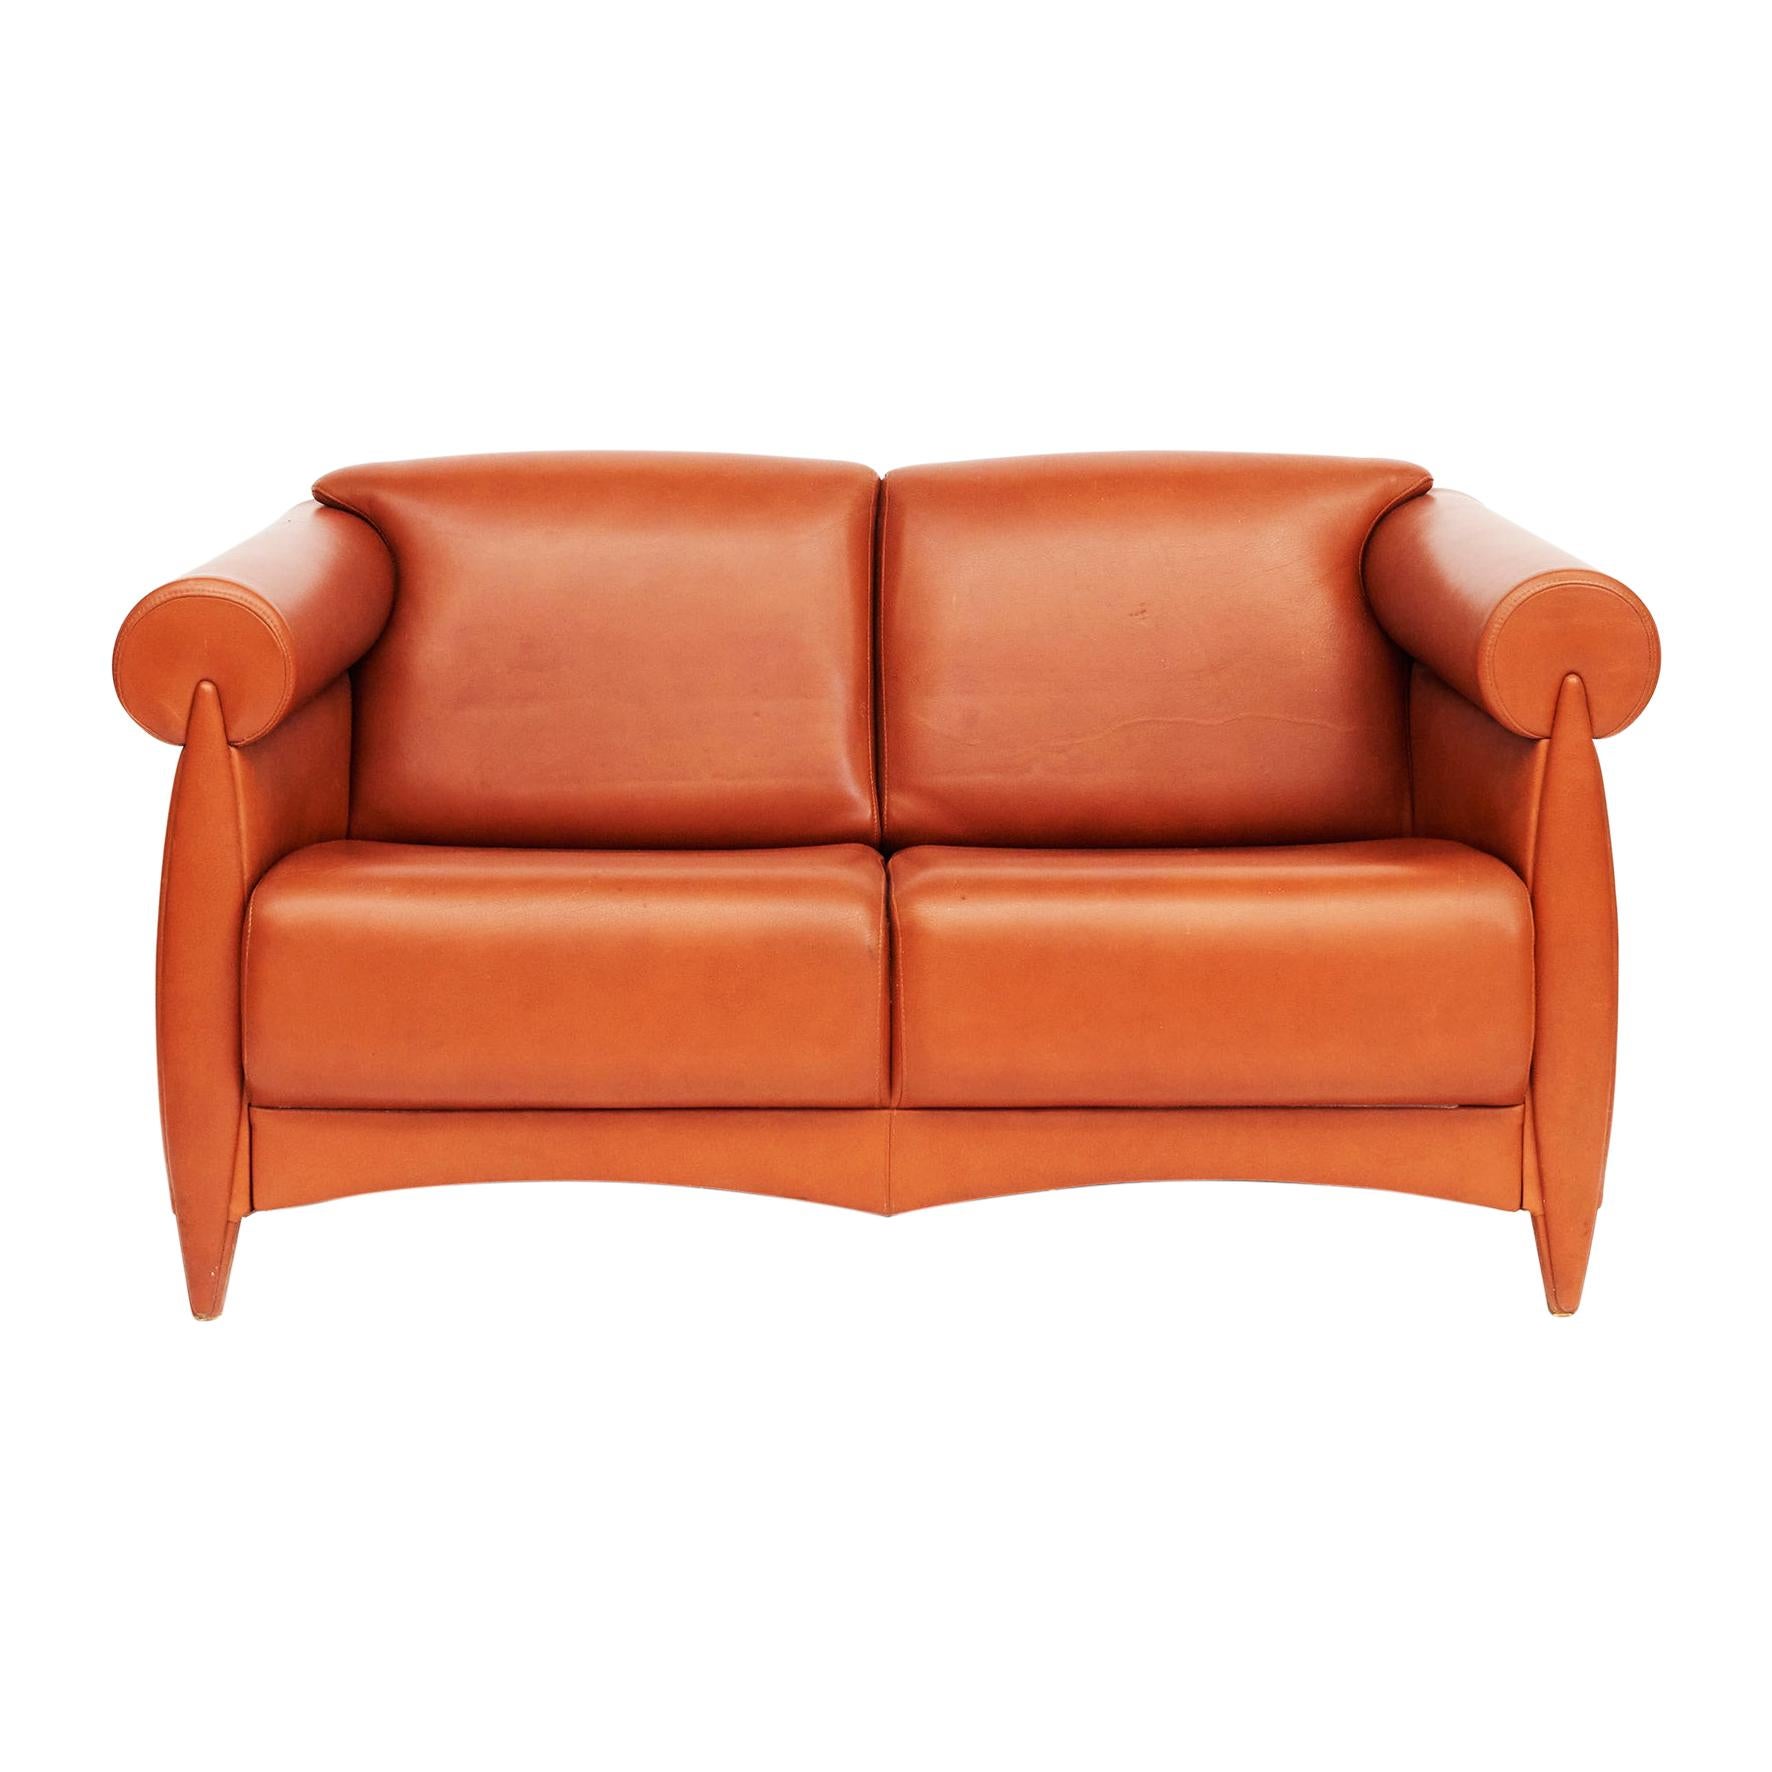 Rare Cognac Colored Leather Sofa by Klaus Wettergren